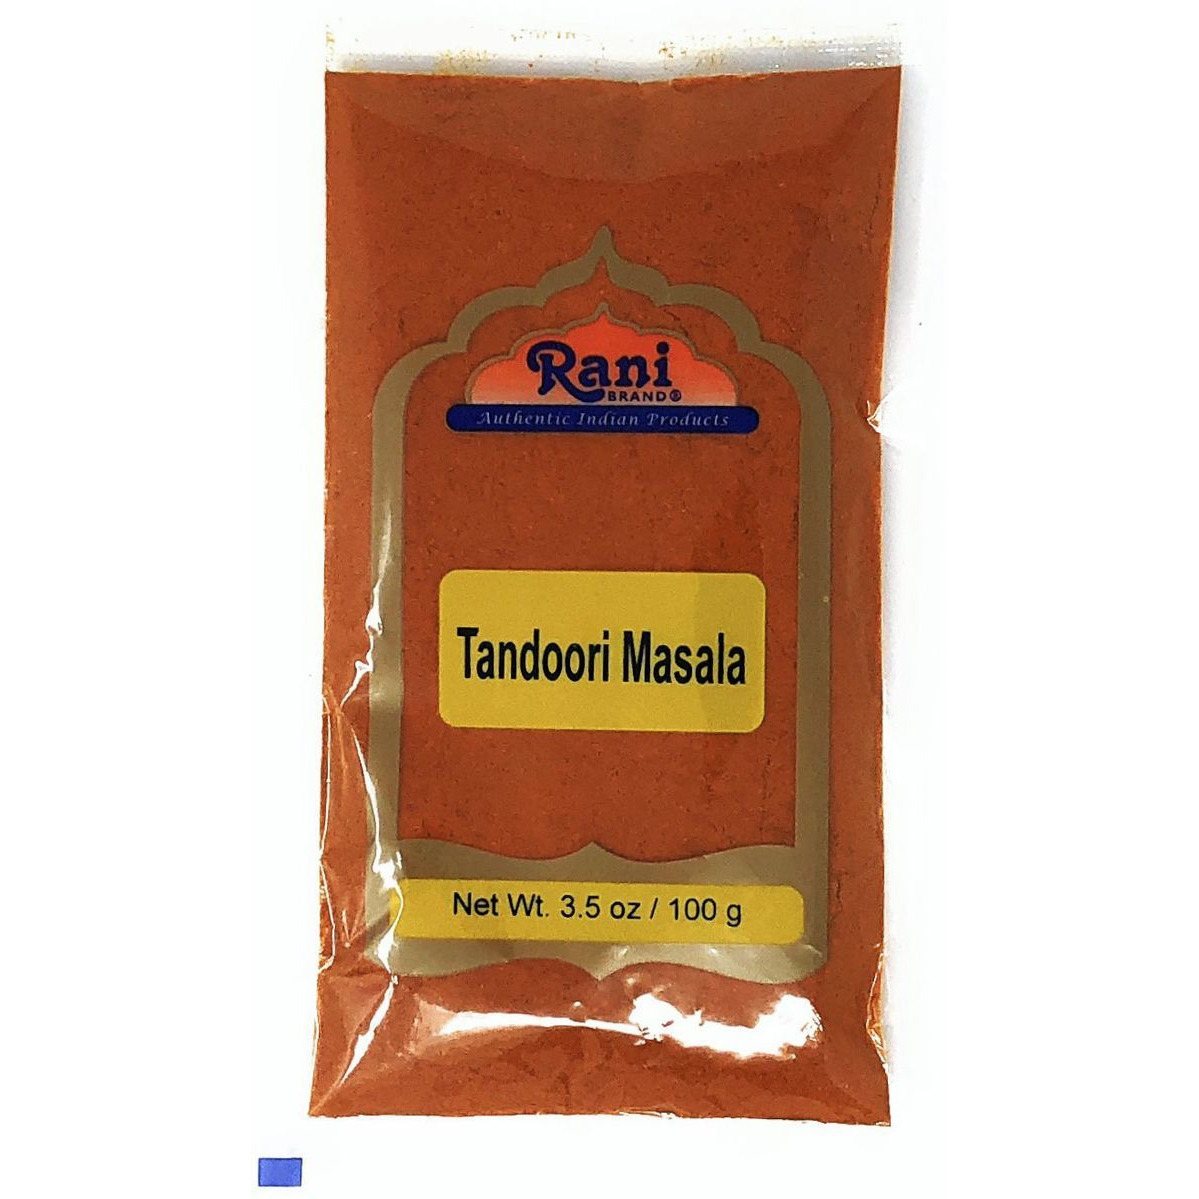 Rani Tandoori Masala (Natural, No Colors Added) Indian Spice Blend 3.5oz (100g) ~ Gluten Free & Salt Free